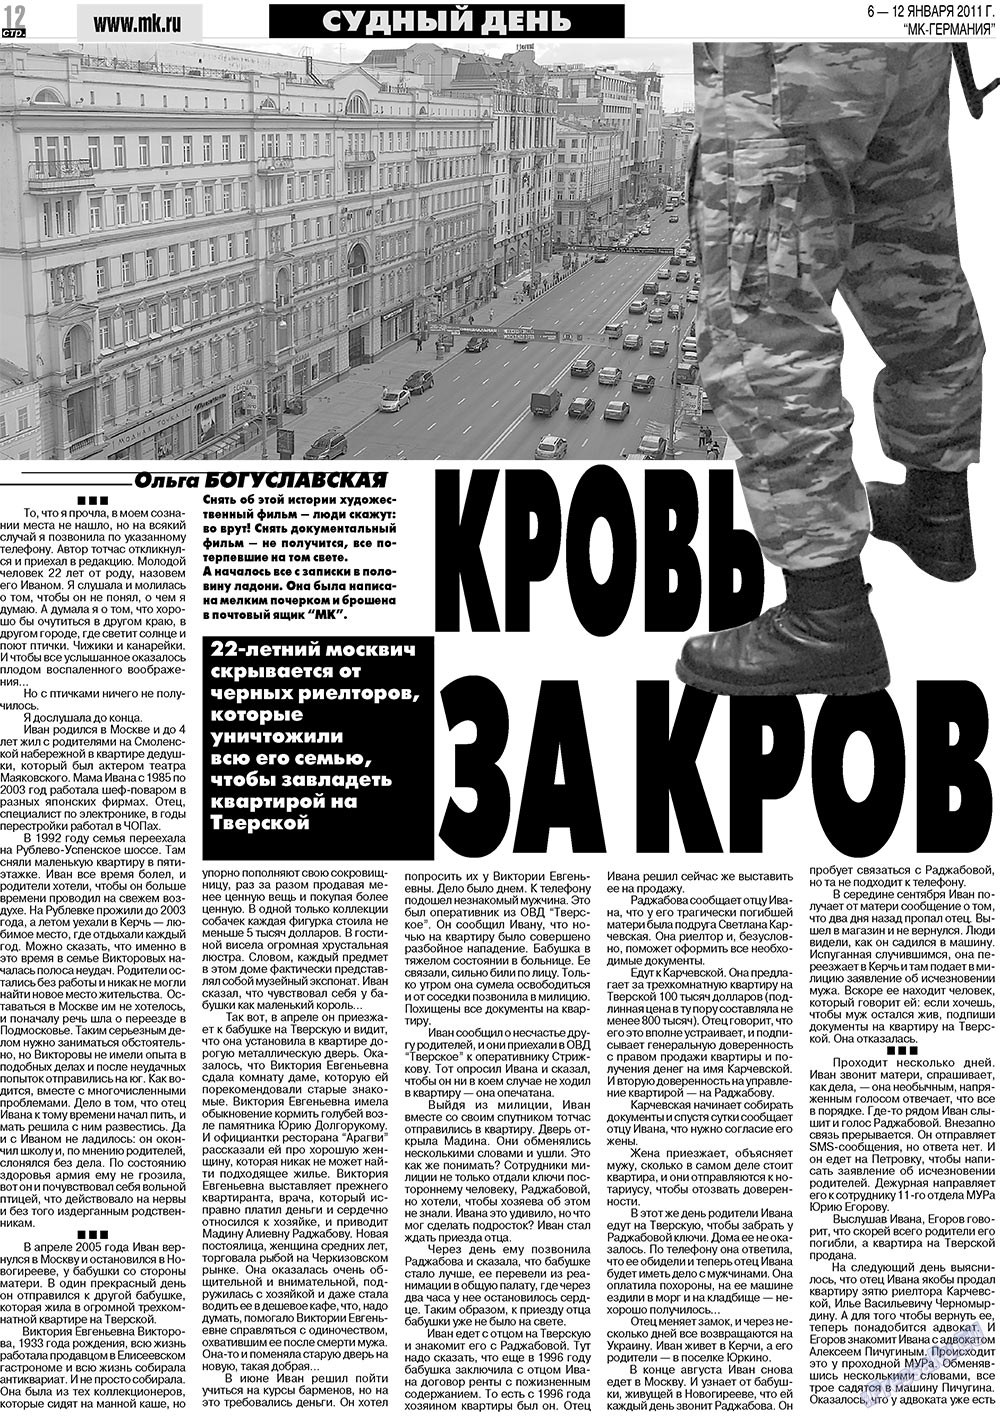 МК-Германия, газета. 2011 №1 стр.12